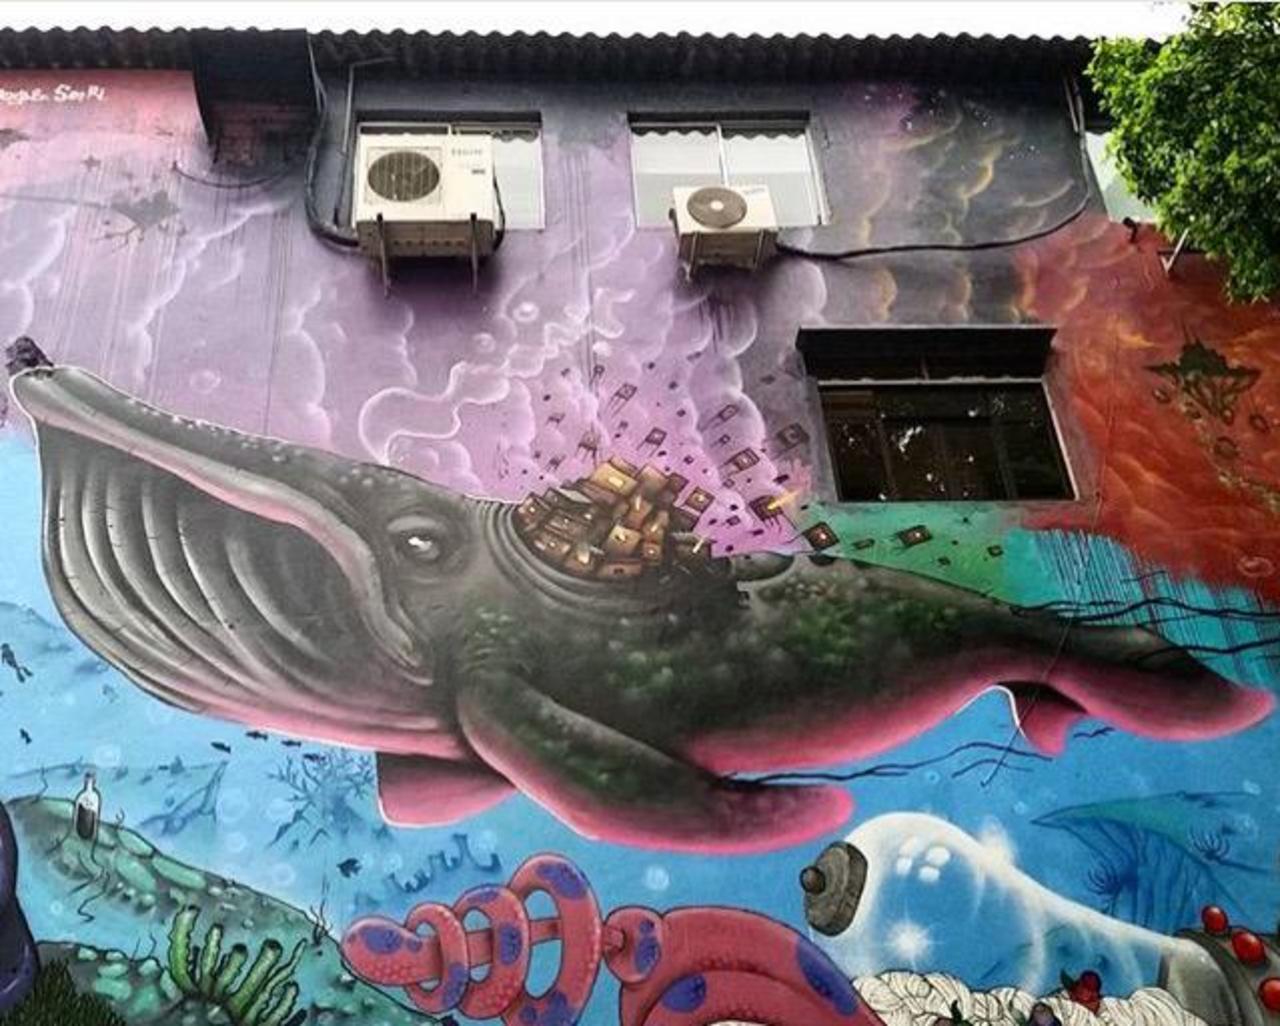 Street Art by joks_johnes Pinheiros, São Paulo 

#art #mural #graffiti #streetart http://t.co/1Hw90ClyQM